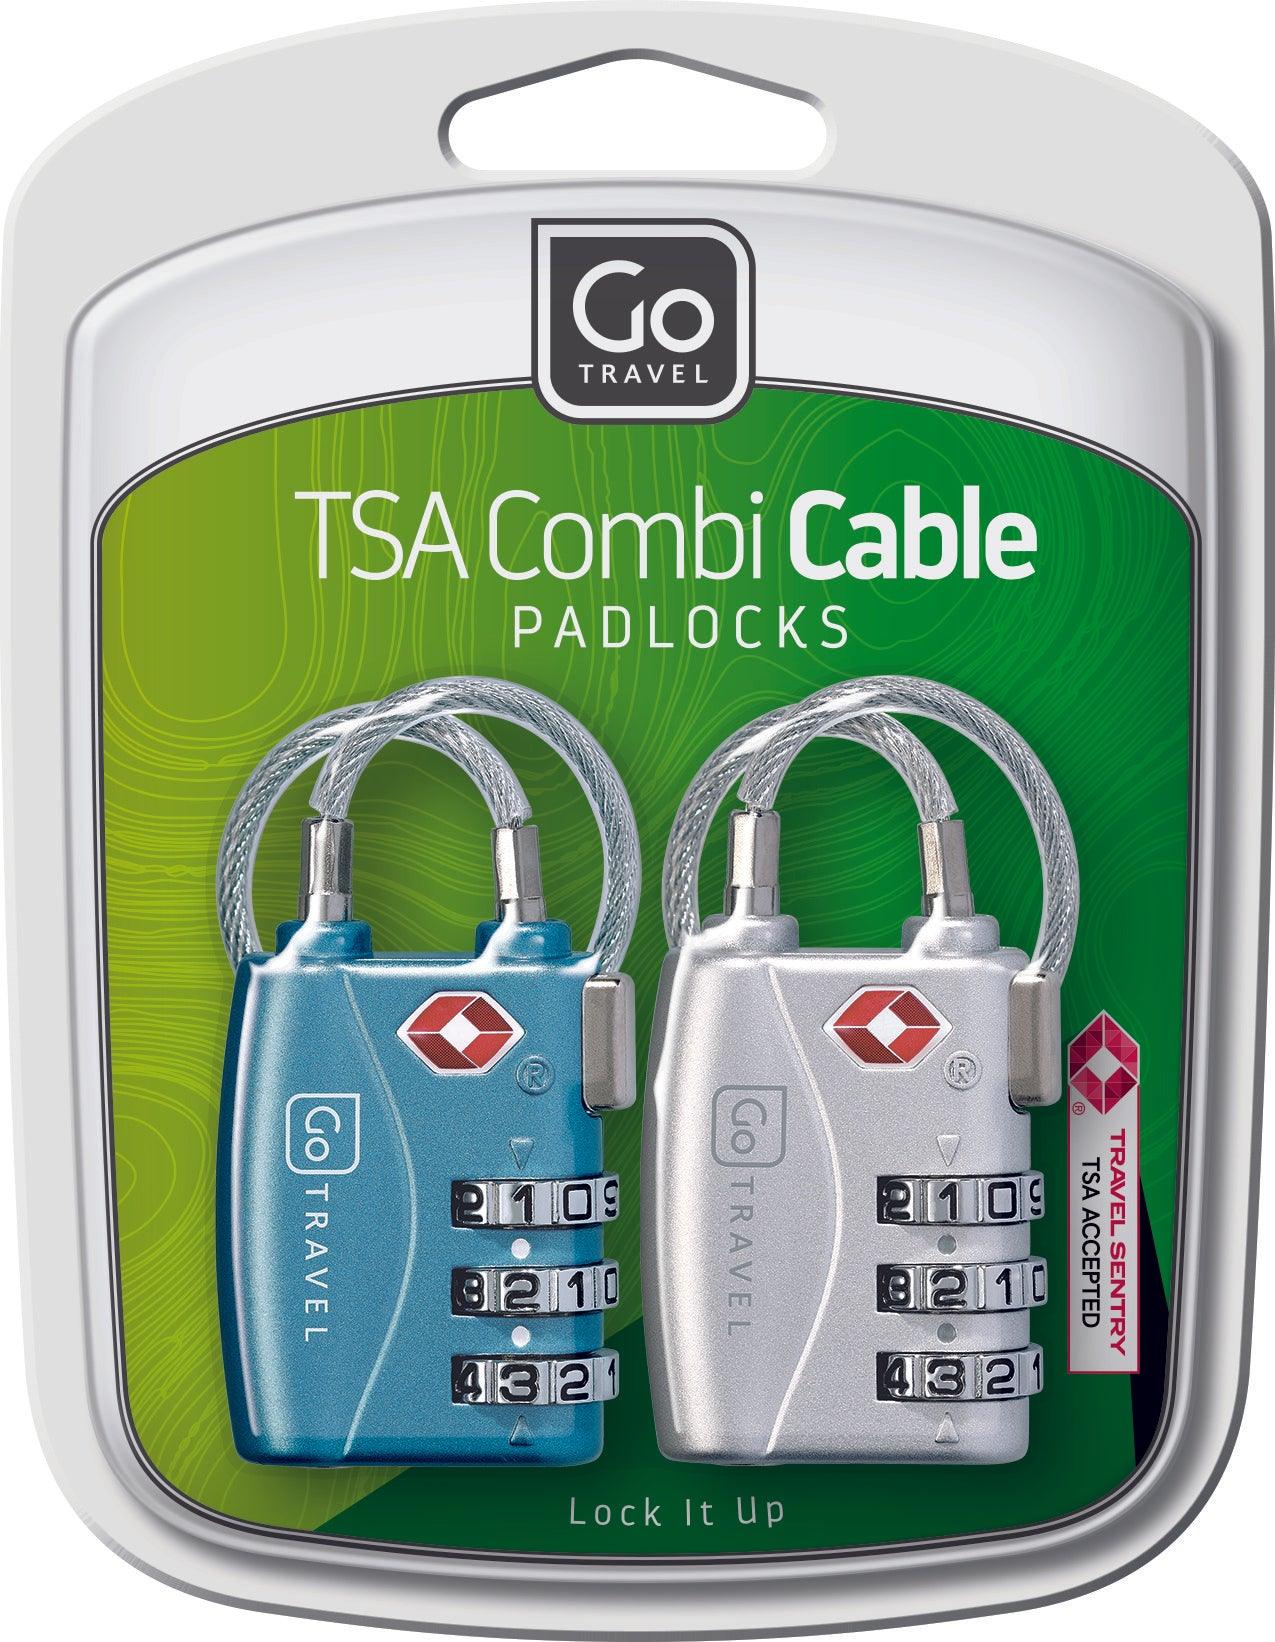 TSA Combi Cable Padlocks - Voyage Luggage